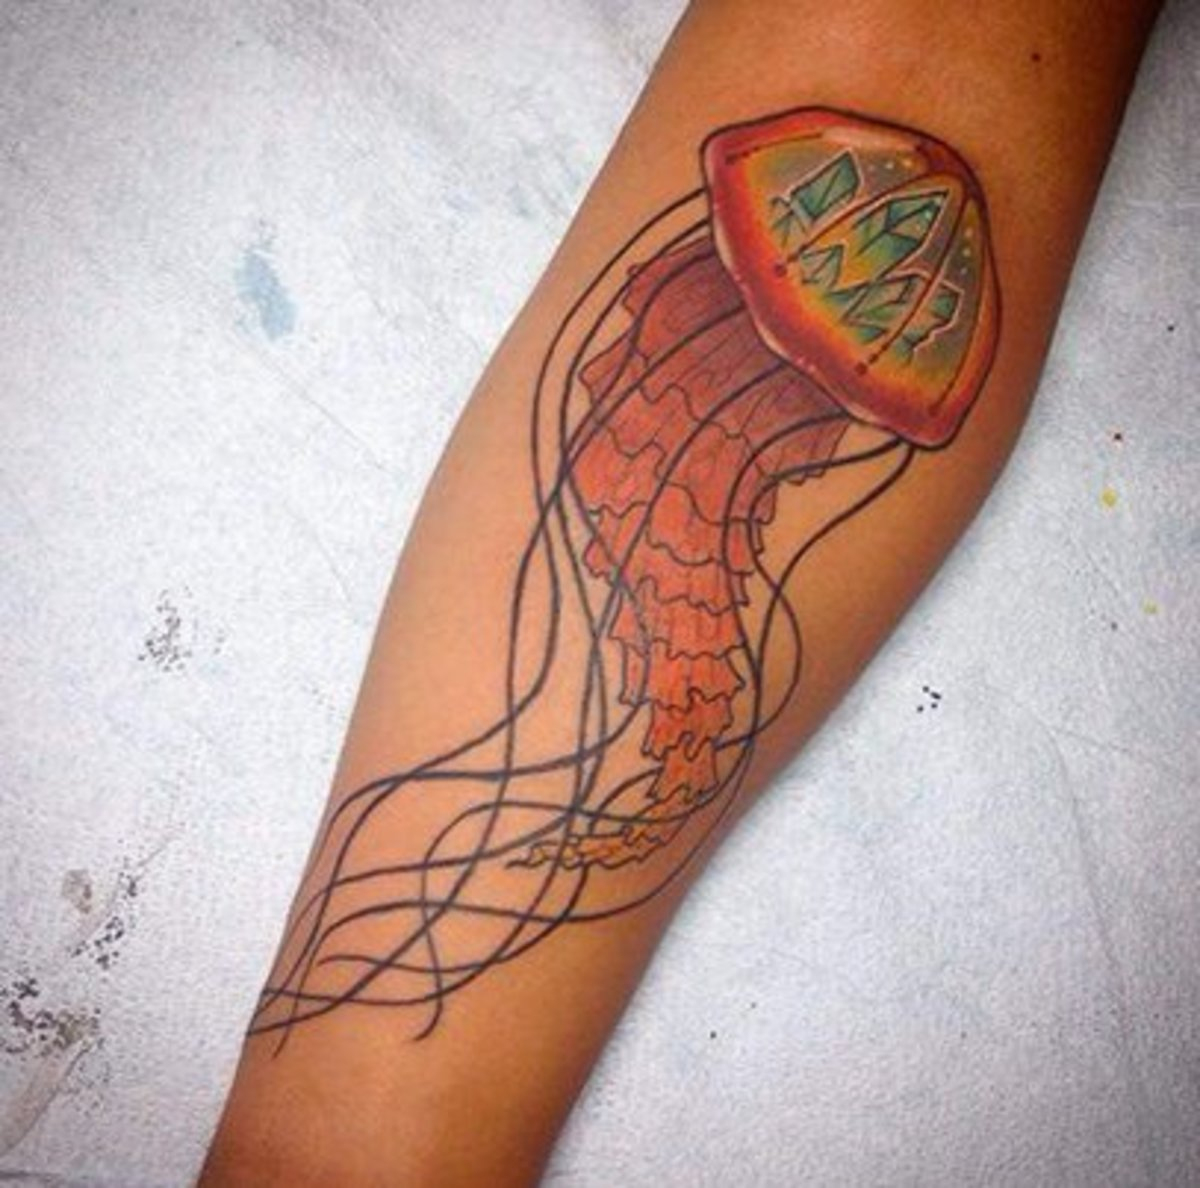 Jellyfish Tattoos - Tattoo Ideas, Artists And Models pour Jellyfish Tattoo Simple 